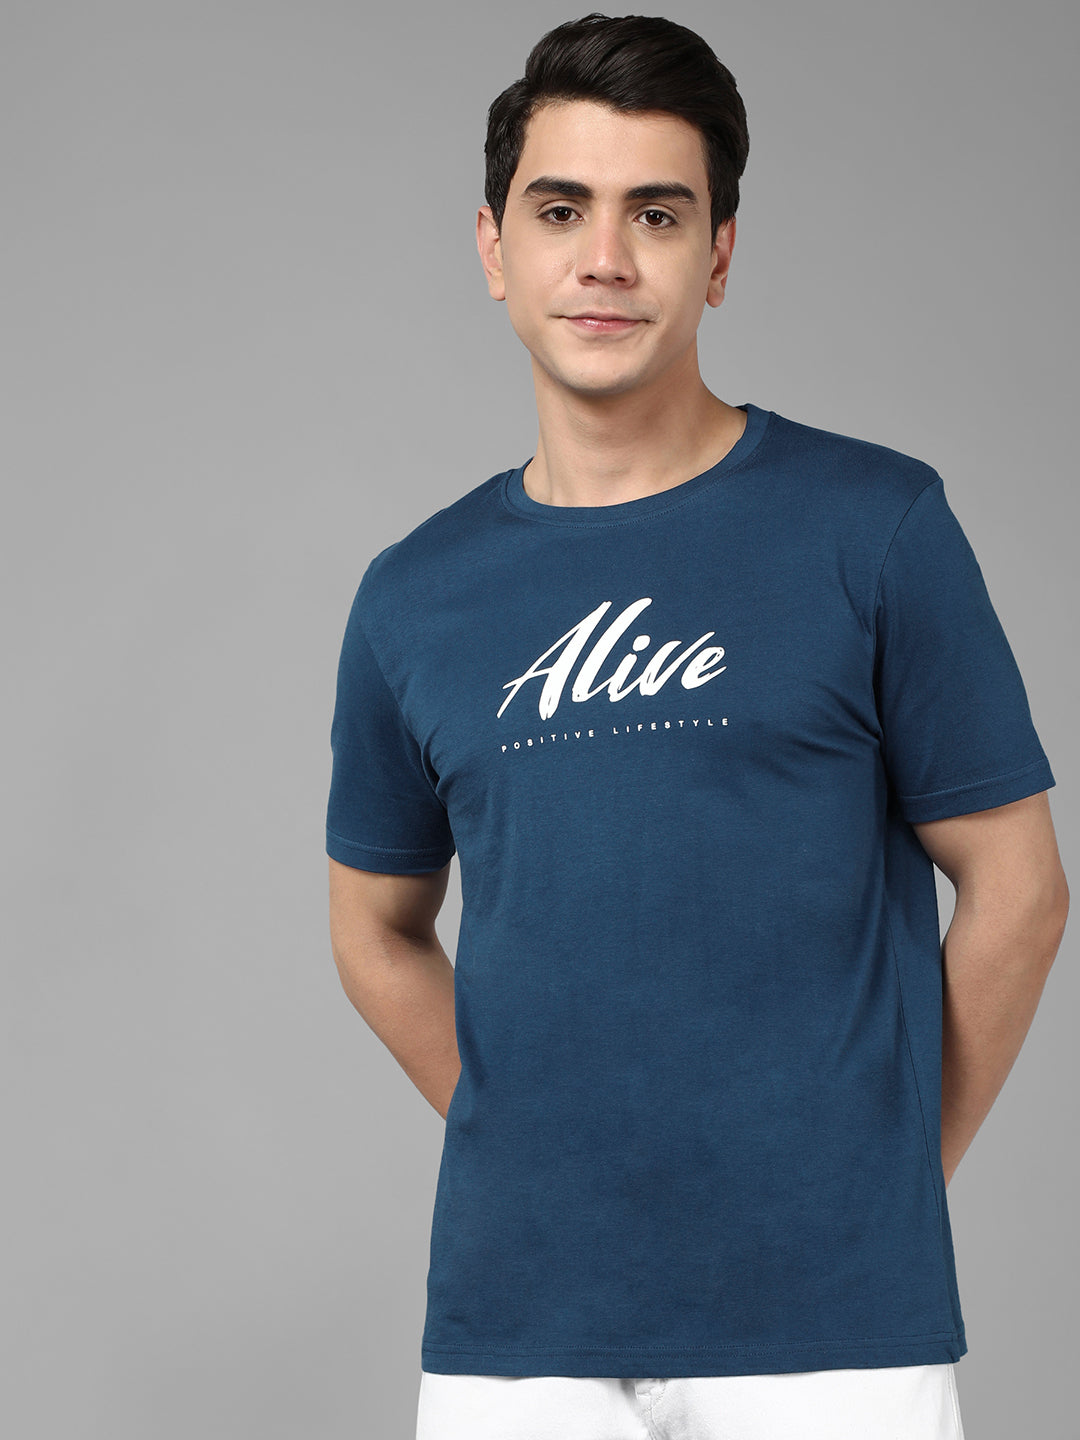 Tom's Alive - Printed Men's Tshirt - Blue Royale